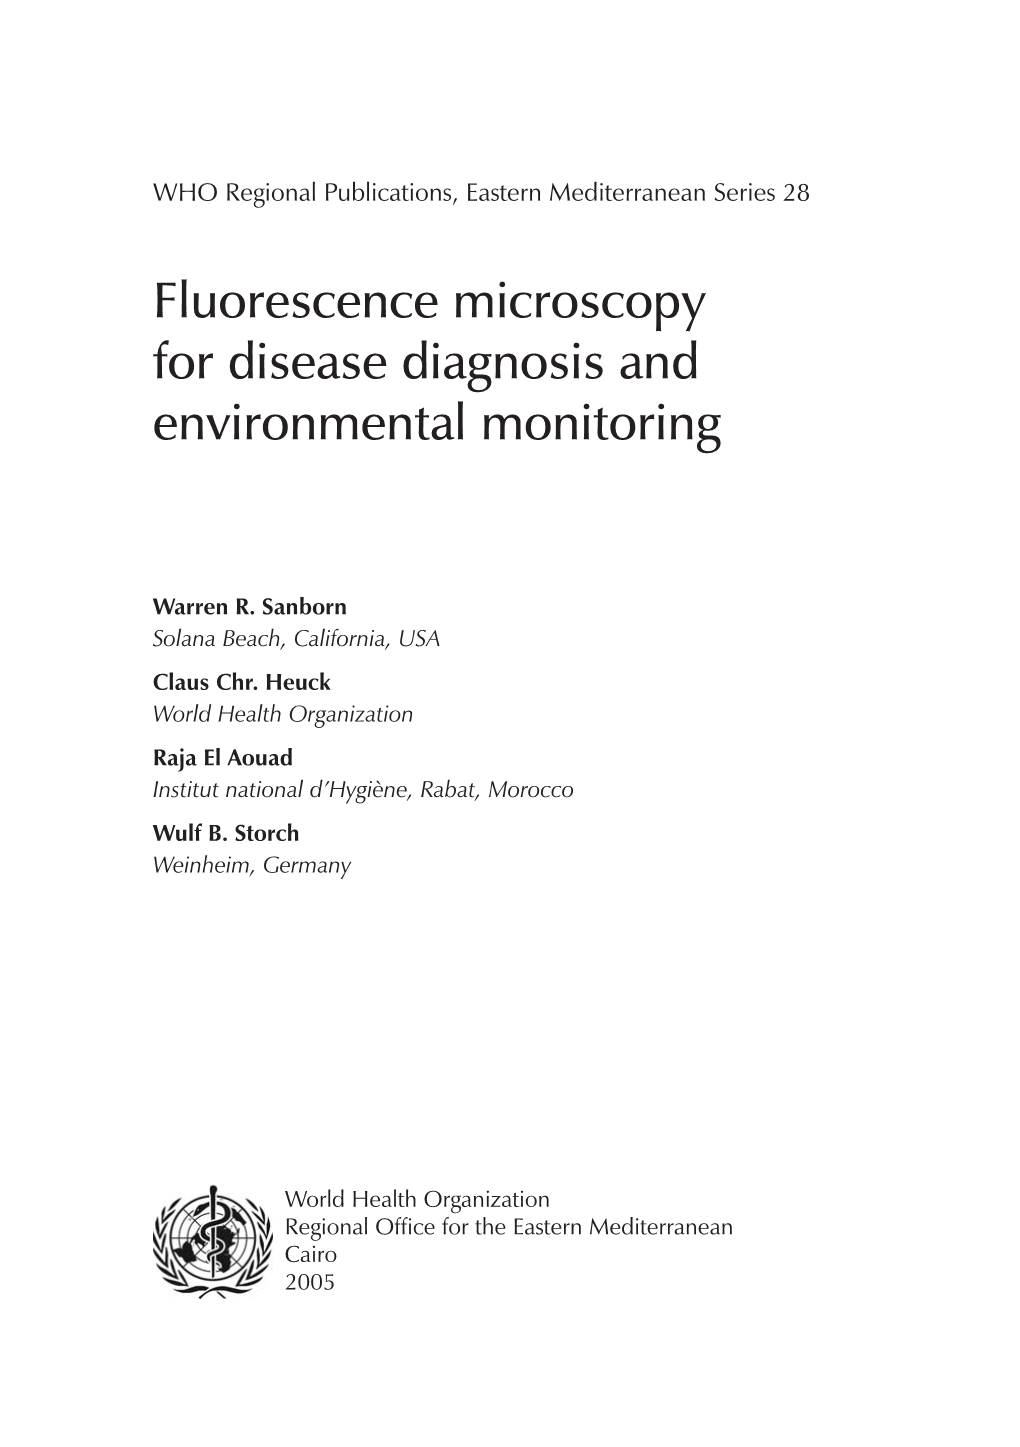 Fluorescence Microscopy for Disease Diagnosis and Environmental Monitoring